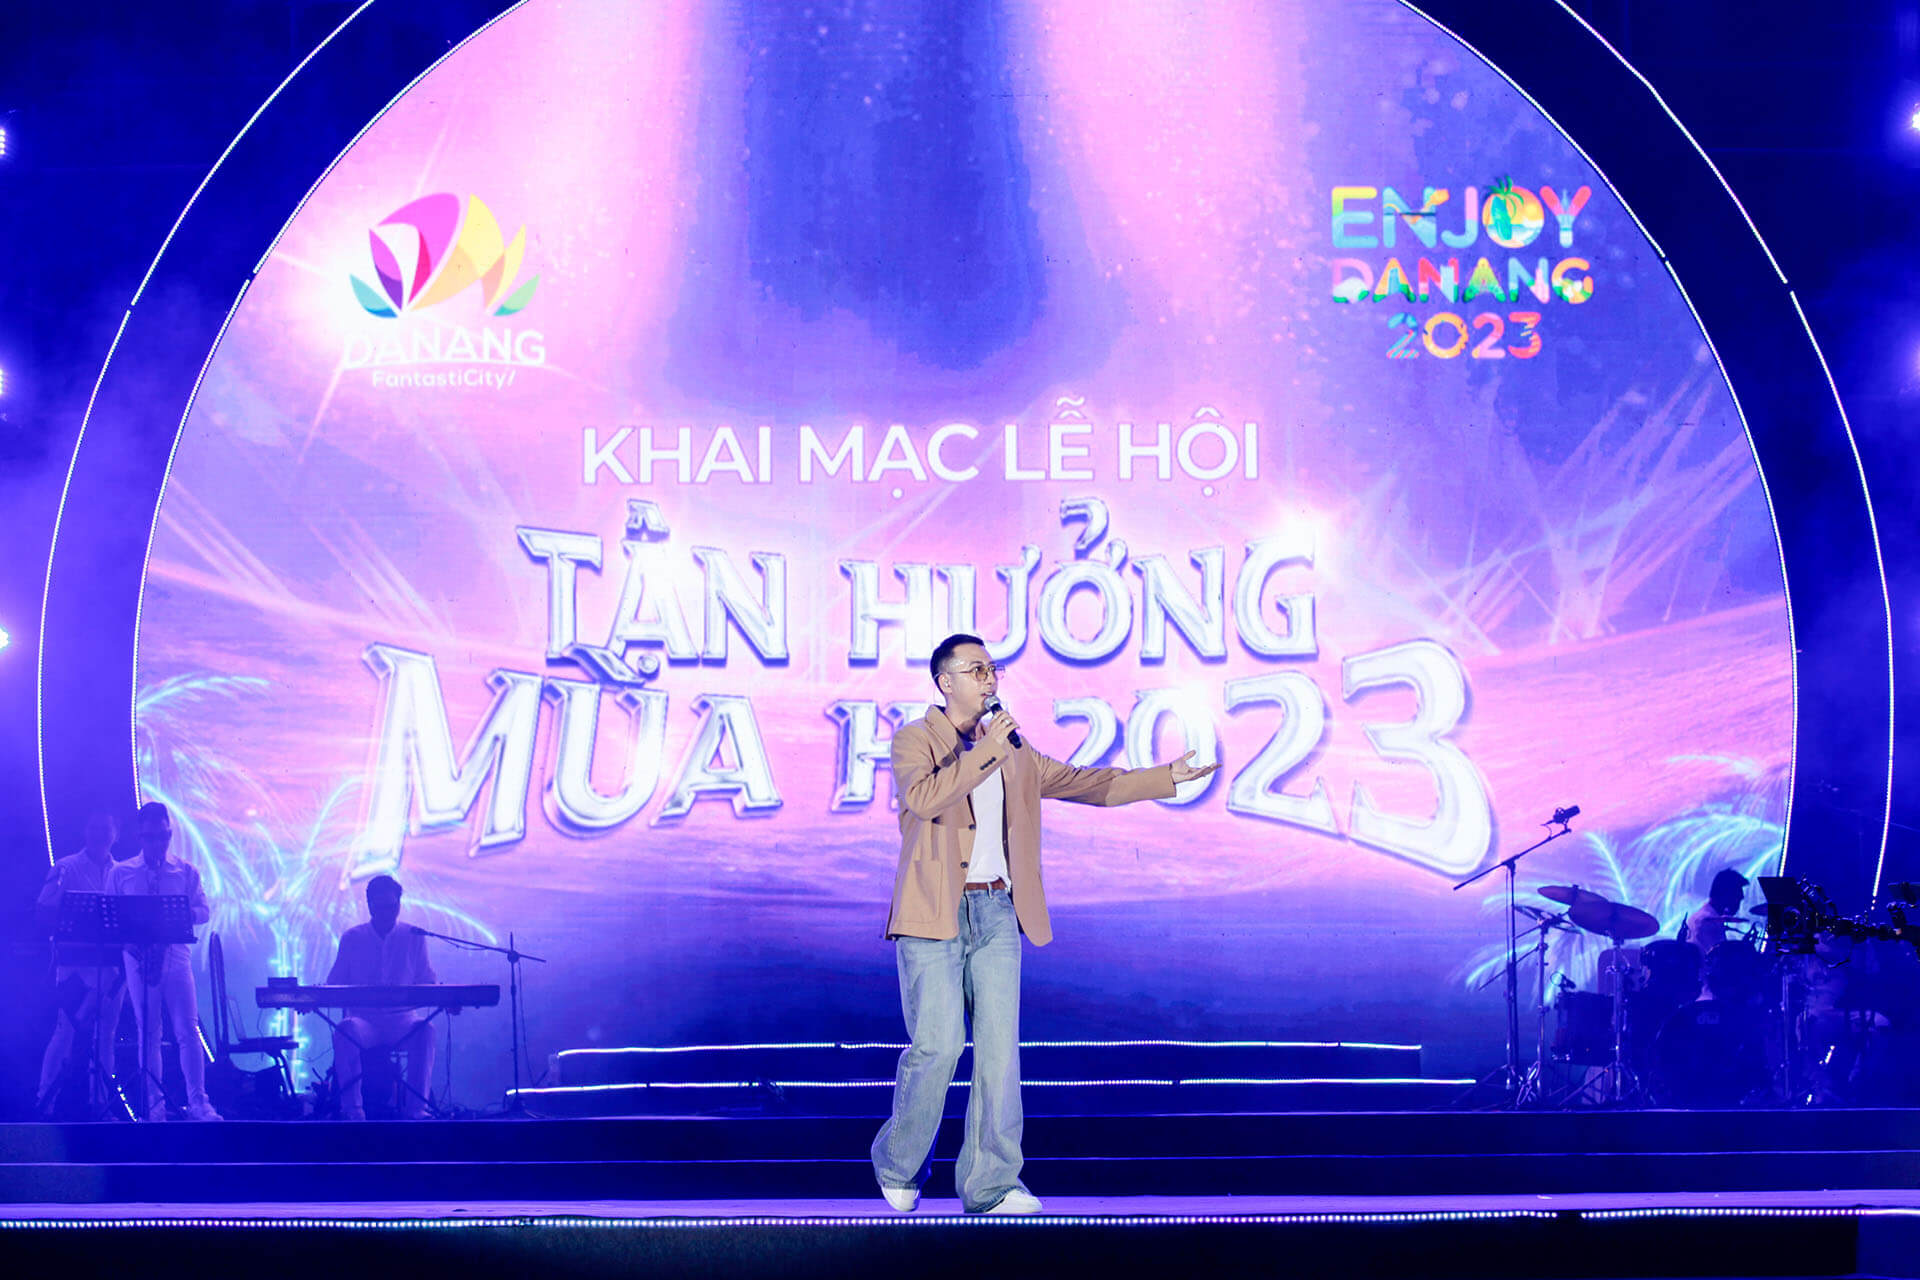 Da Nang Khai Mac Le Hoi Tan Huong Mua He 2023 Enjoy Danang 2023 03